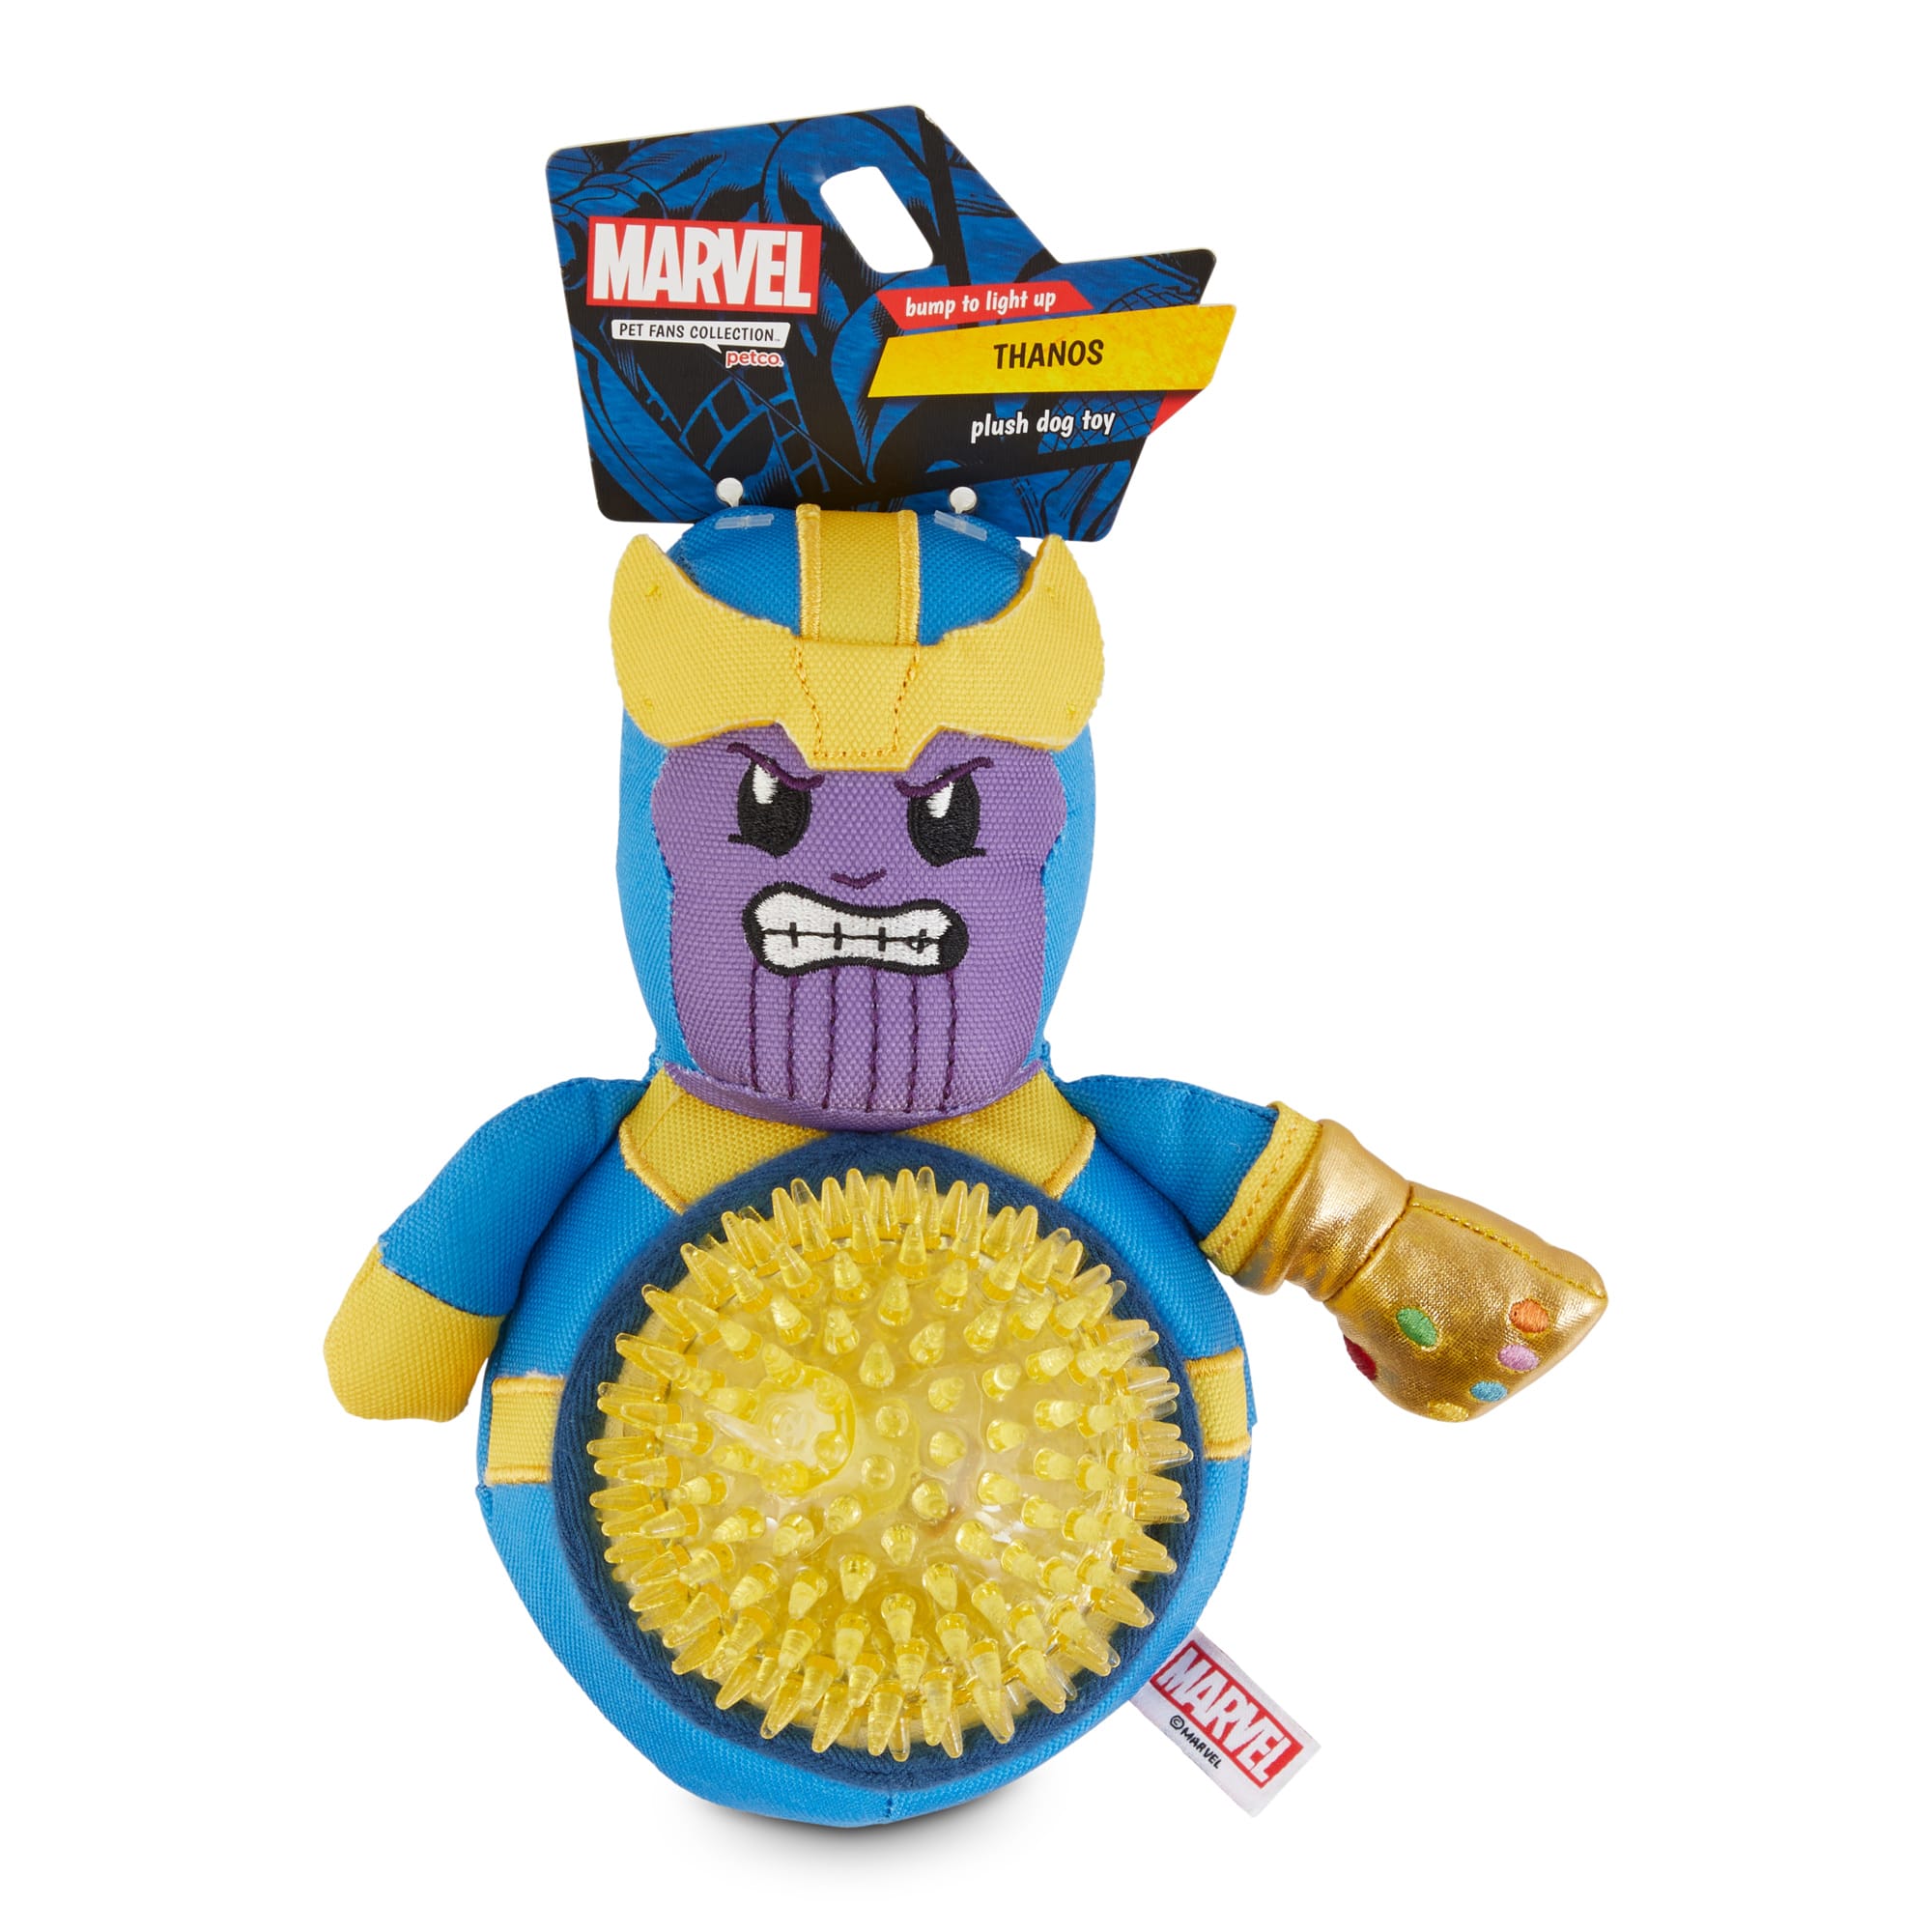 Marvel Avengers Thanos LED Spiny Ball Plush Dog Toy, Small